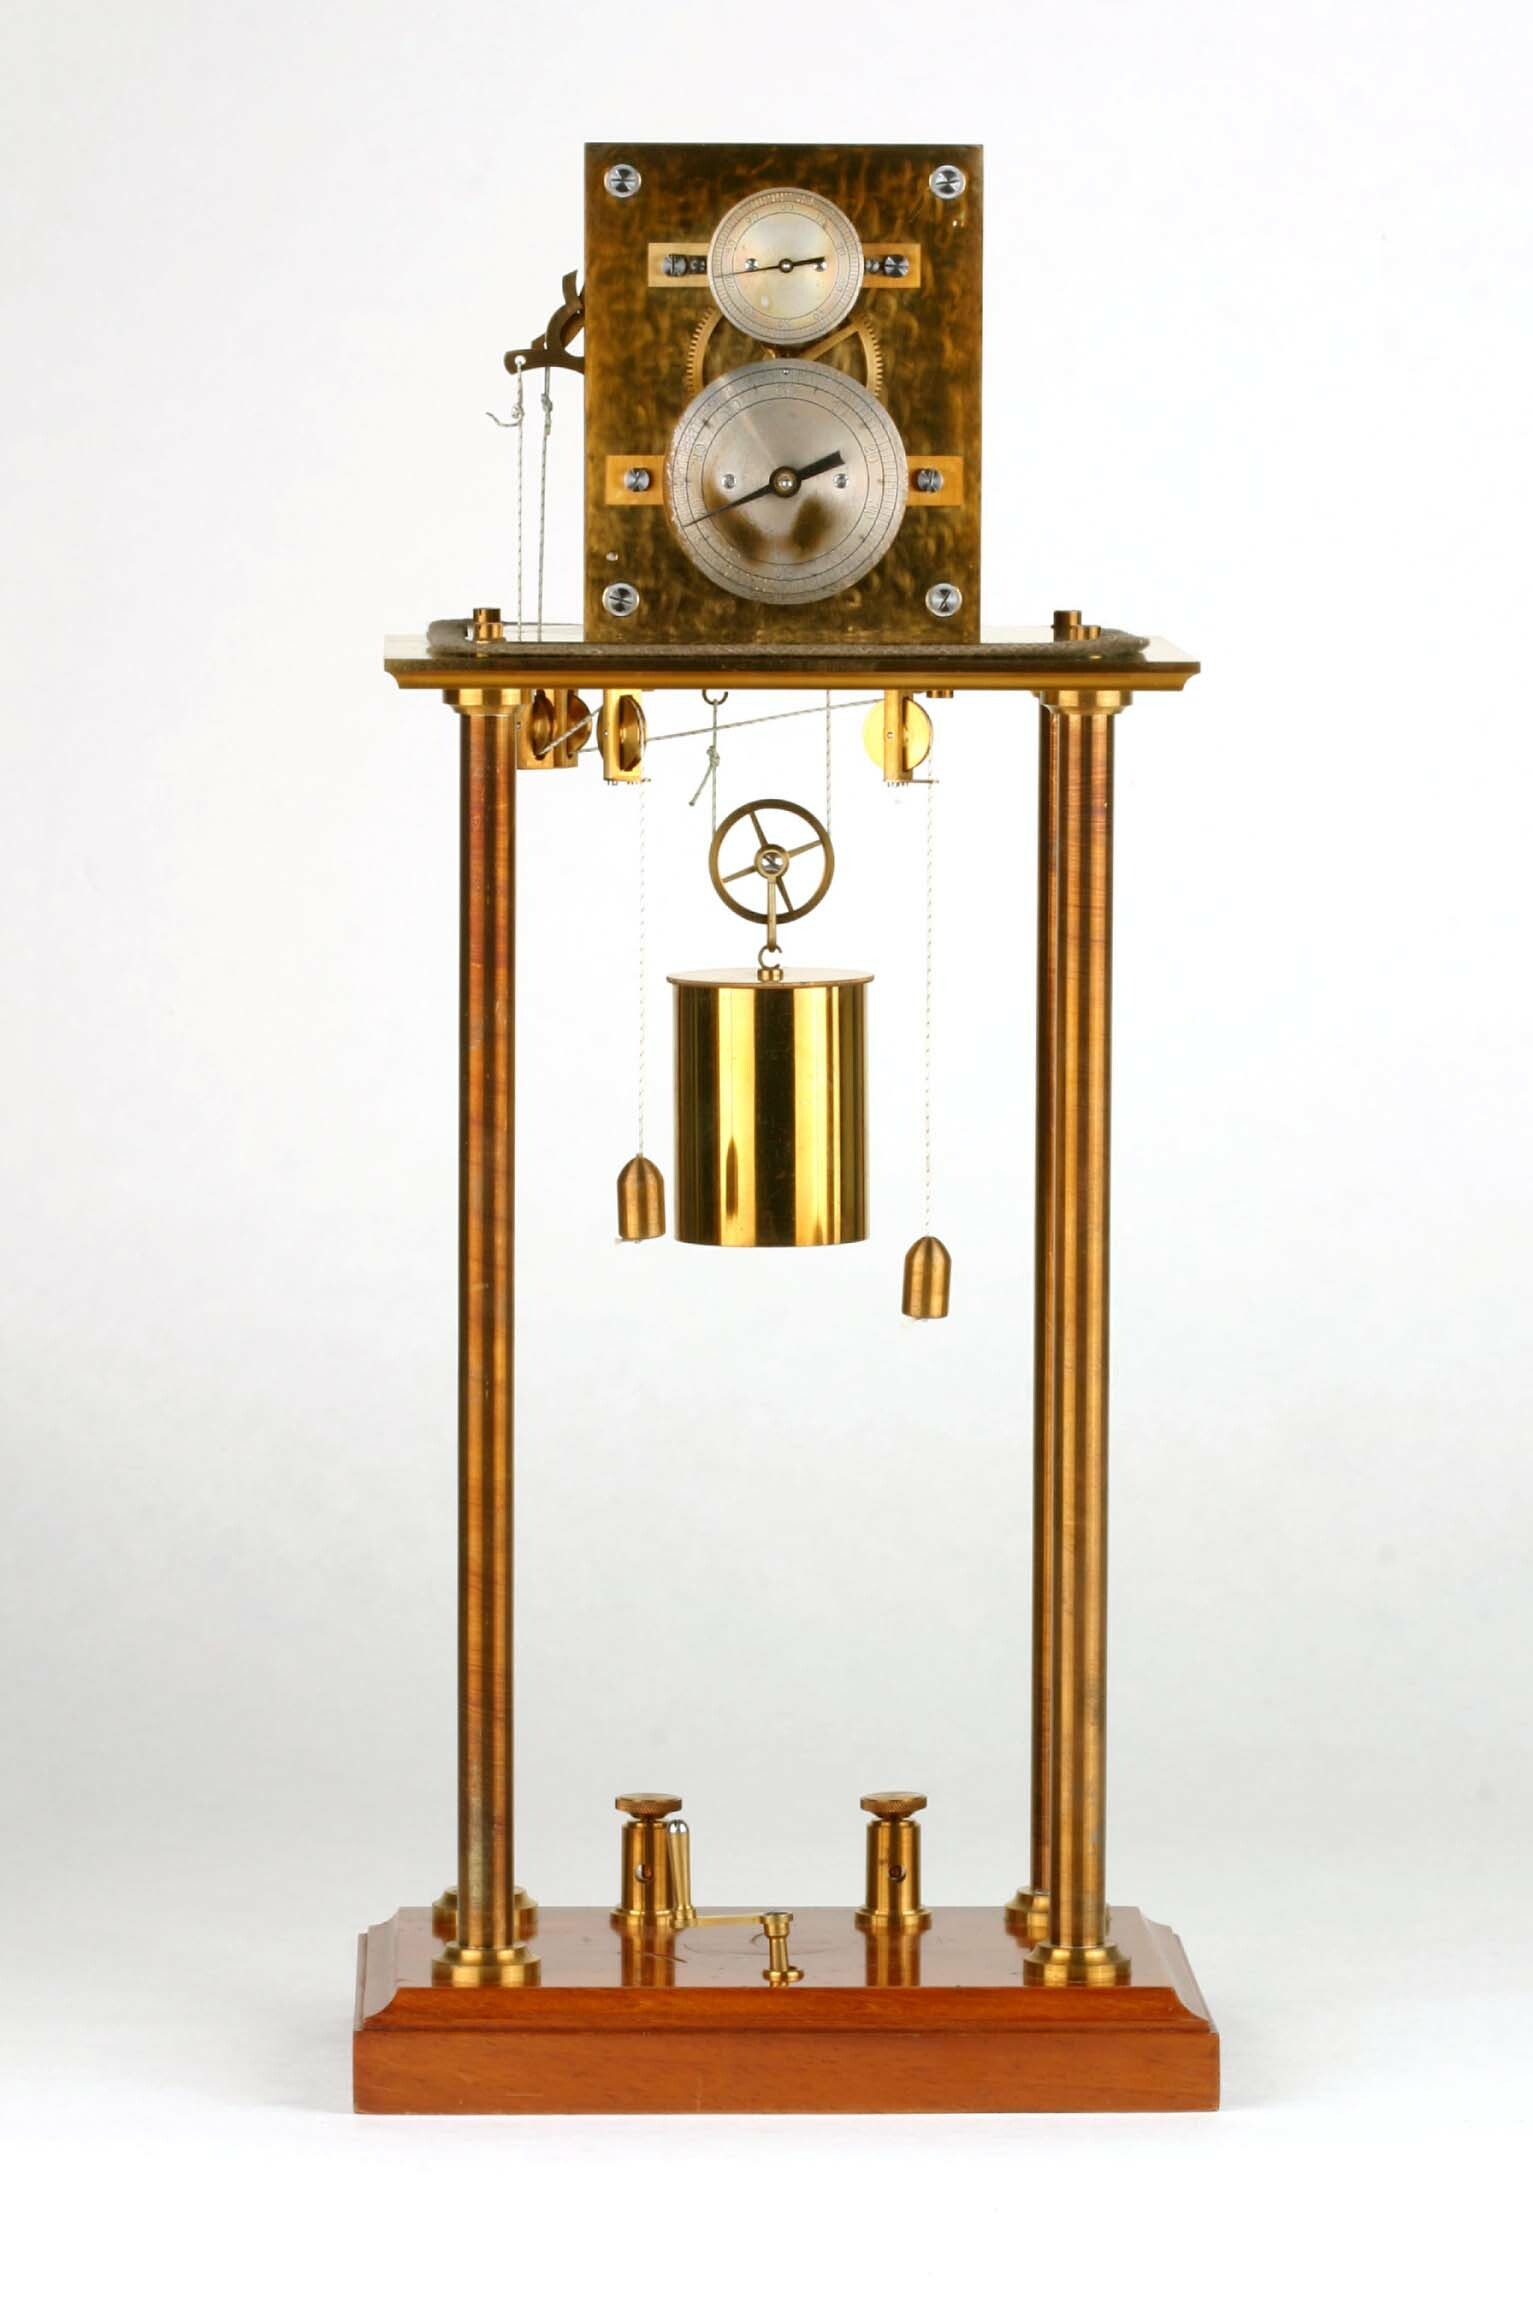 Chronoskop, Uhrmacherschule Furtwangen, um 1900 (Deutsches Uhrenmuseum CC BY-SA)